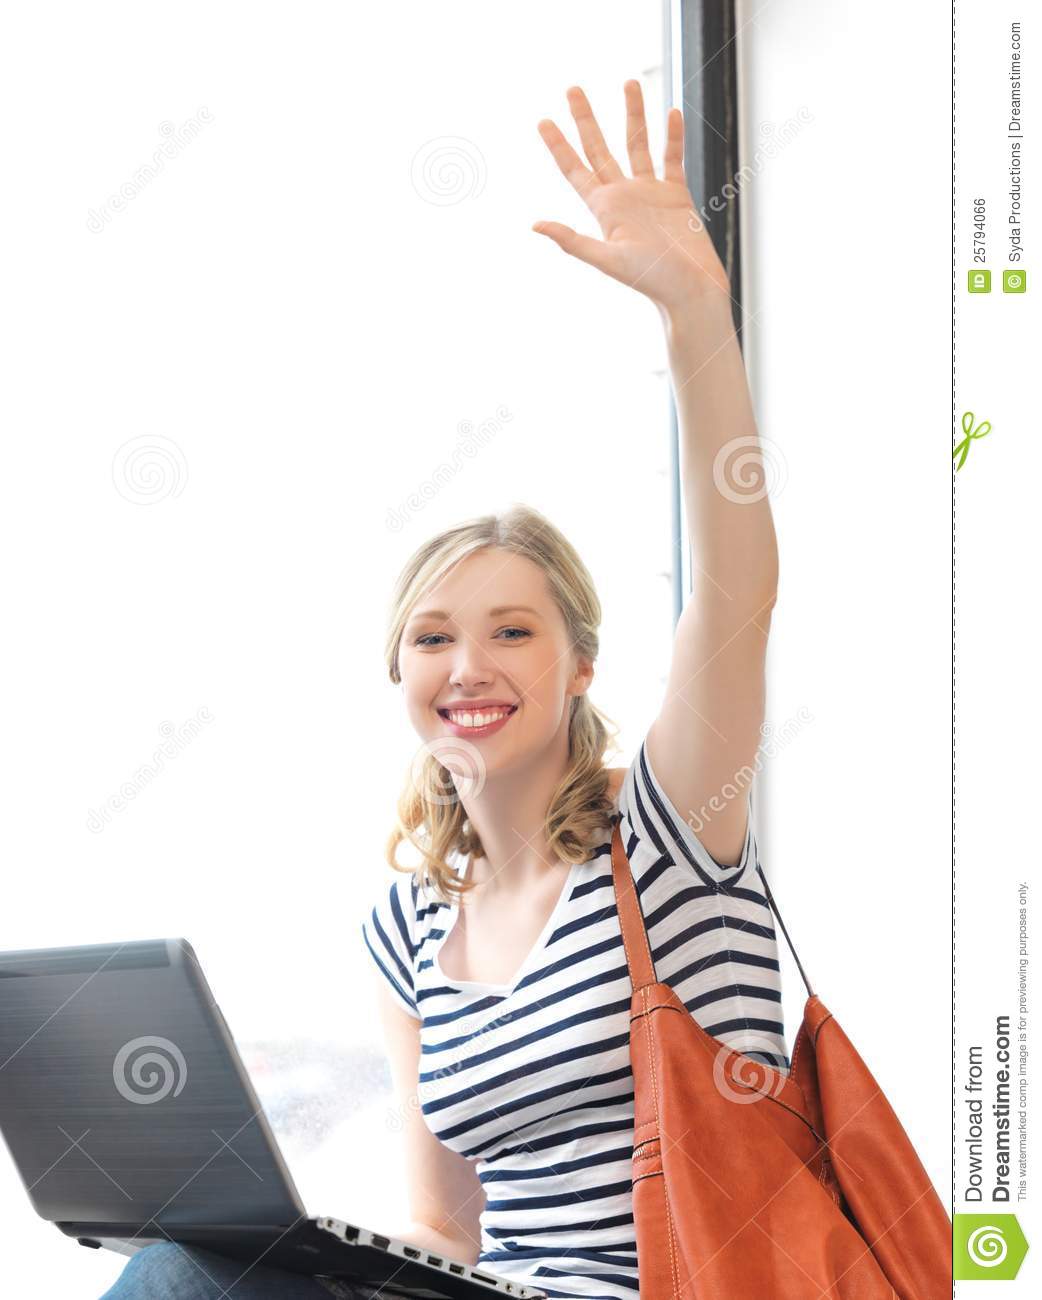 Happy Teenage Girl Waving A Greeting Royalty Free Stock Image   Image    